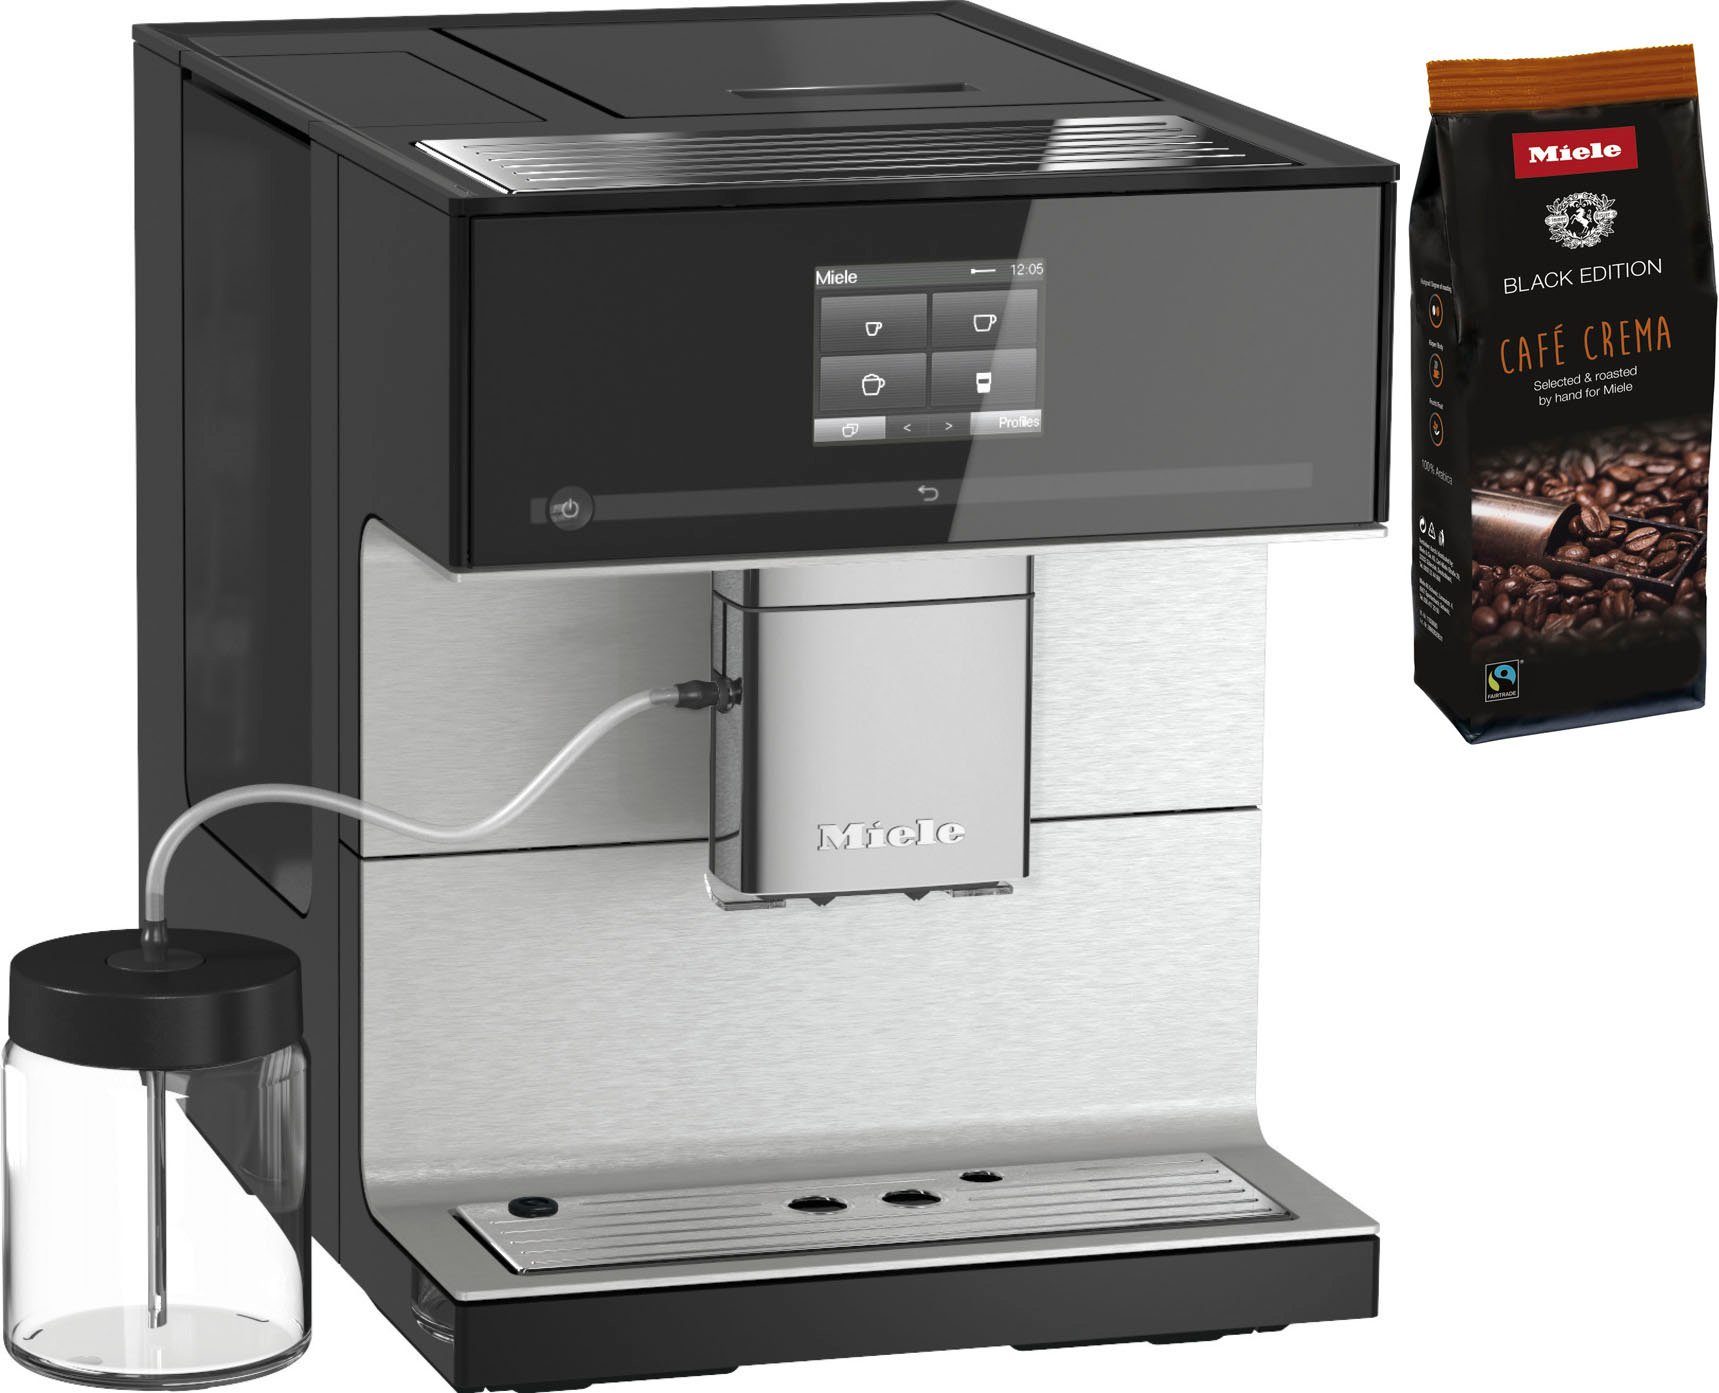 Kaffeevollautomat individuelle Kaffeeerlebnis Persönliches CM7350 Kaffeekannenfunktion, - CoffeePassion, Milchgefäß, Miele inkl. Genießerprofile